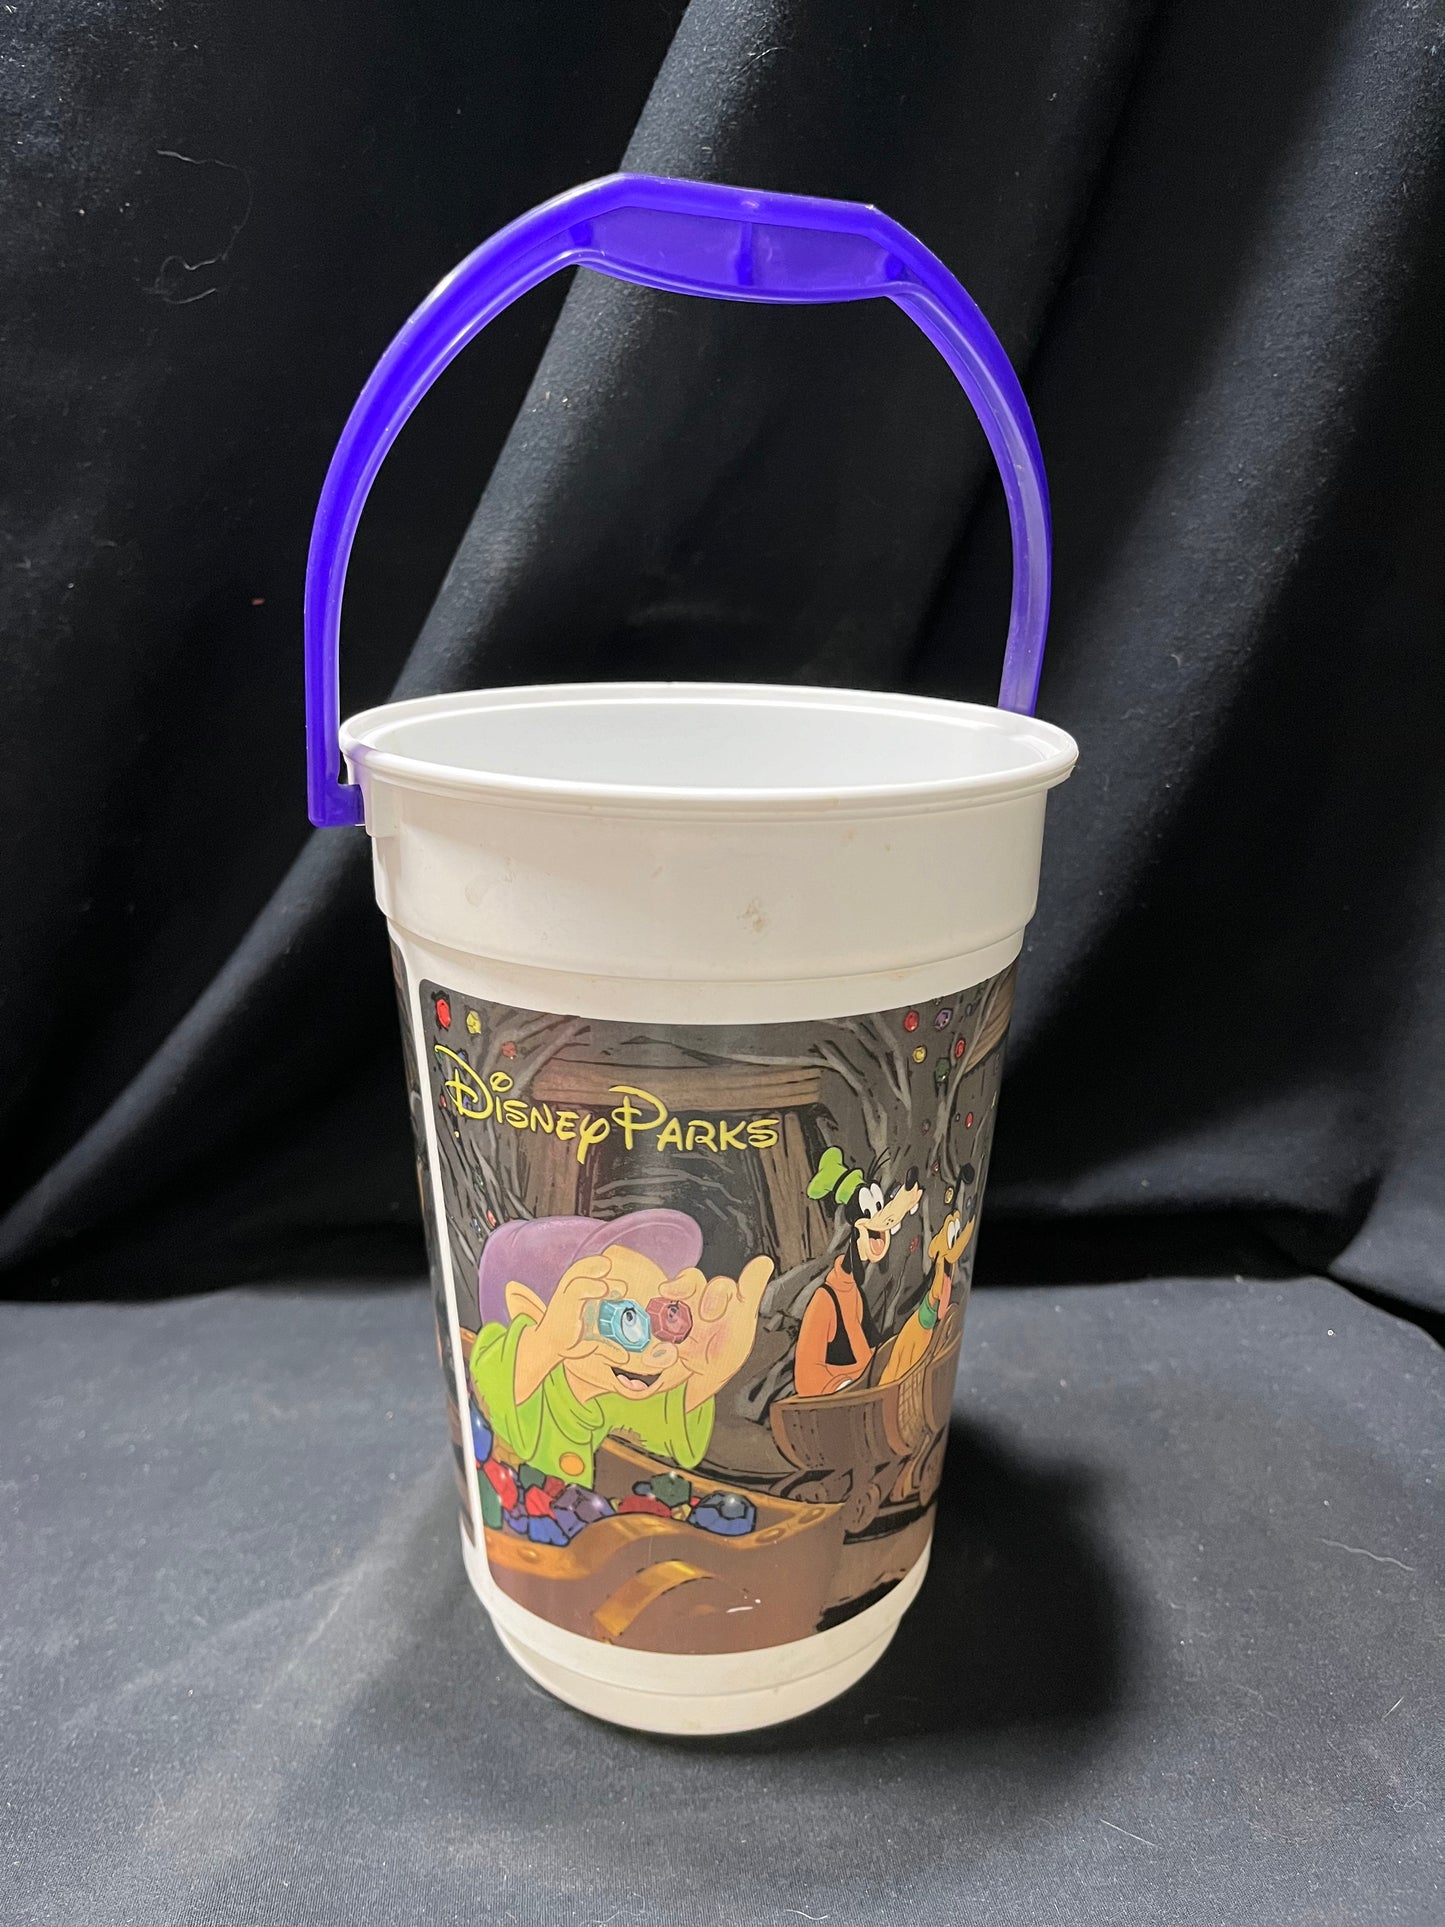 Disney Parks Popcorn Bucket Snow White Mine Cart - Missing Lid